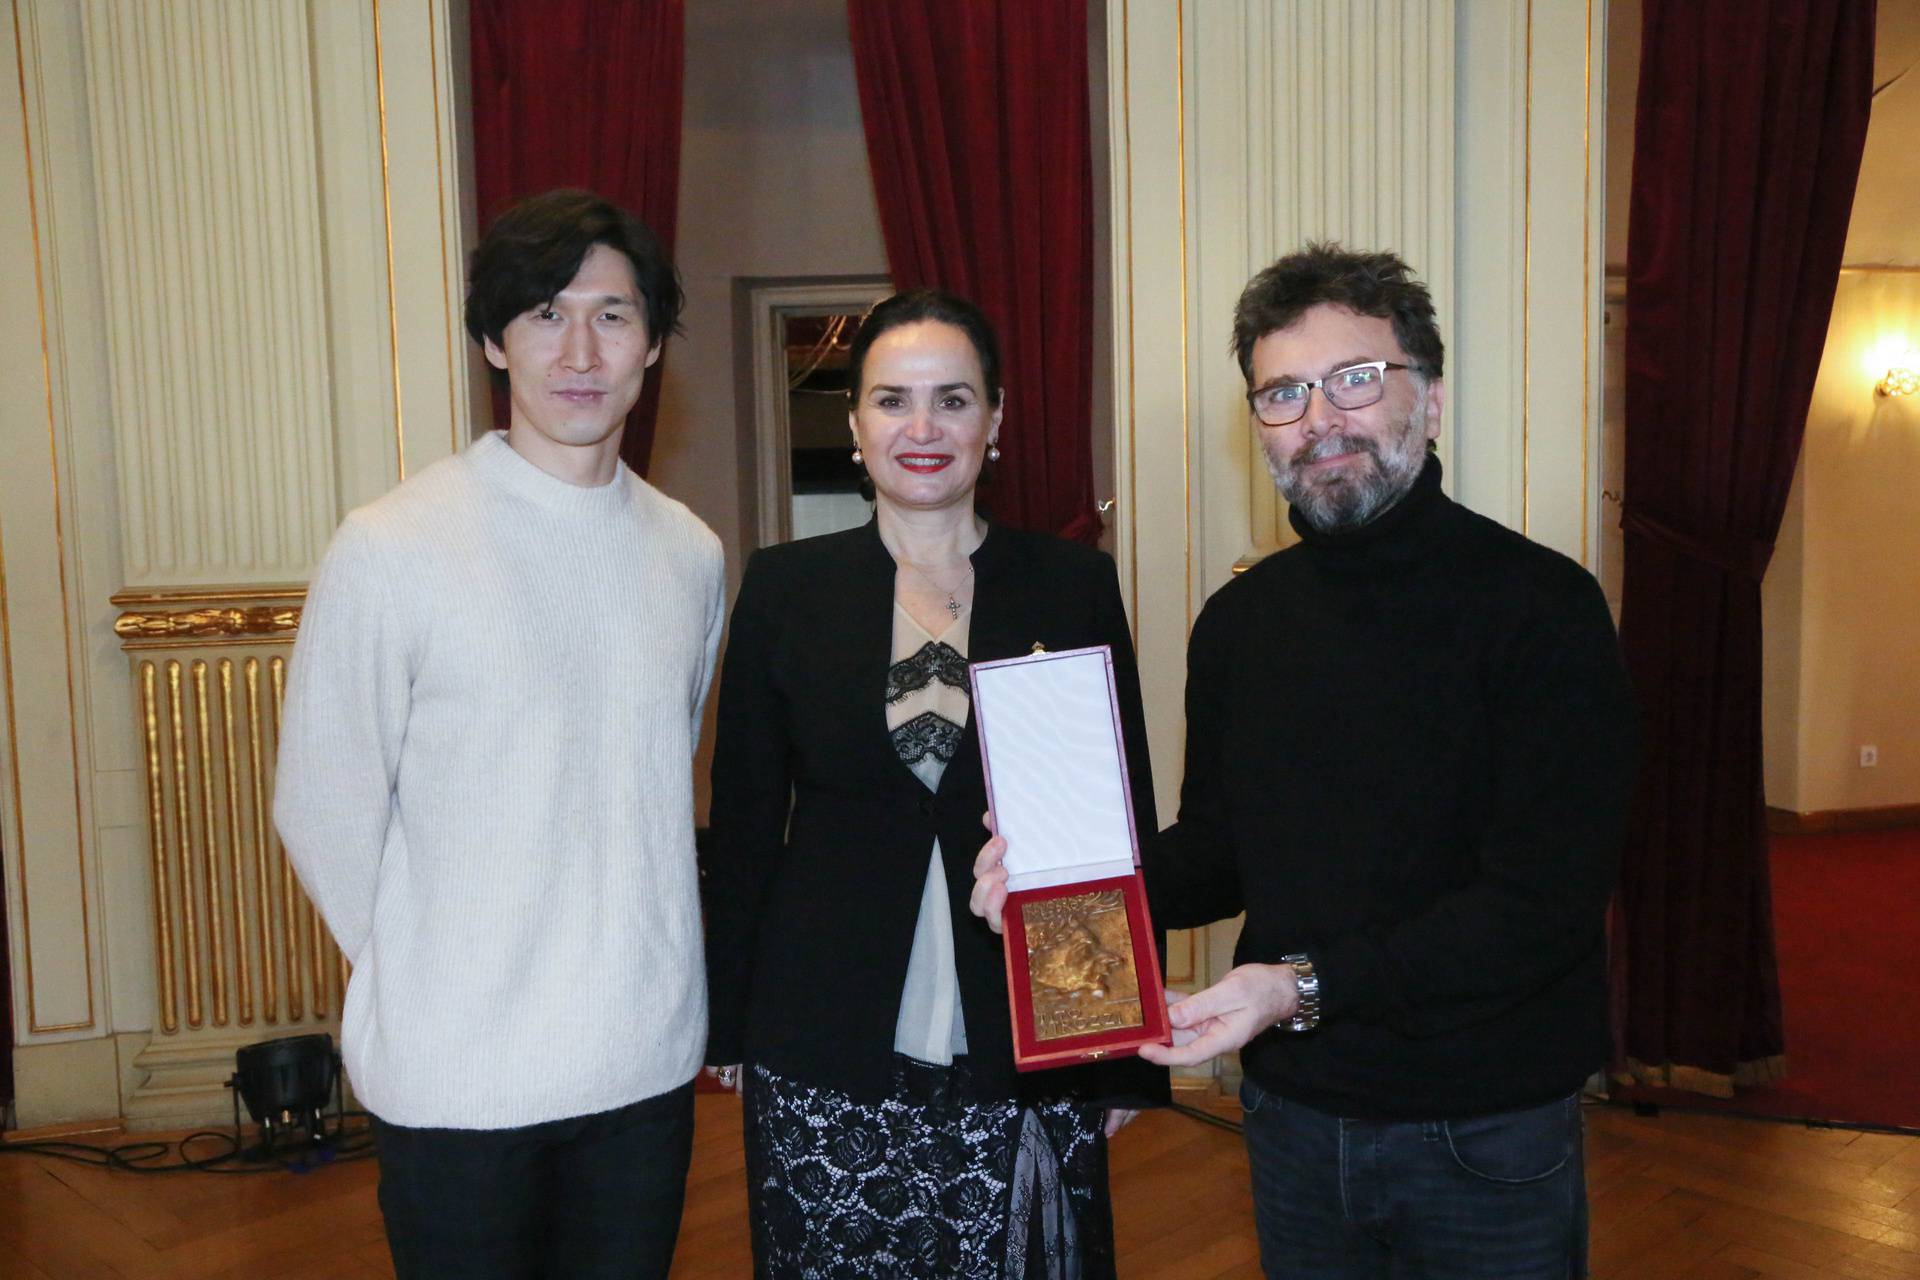 Nagrada Tito Strozzi dodijeljena baletnoj predstavi 'Peer Gynt'